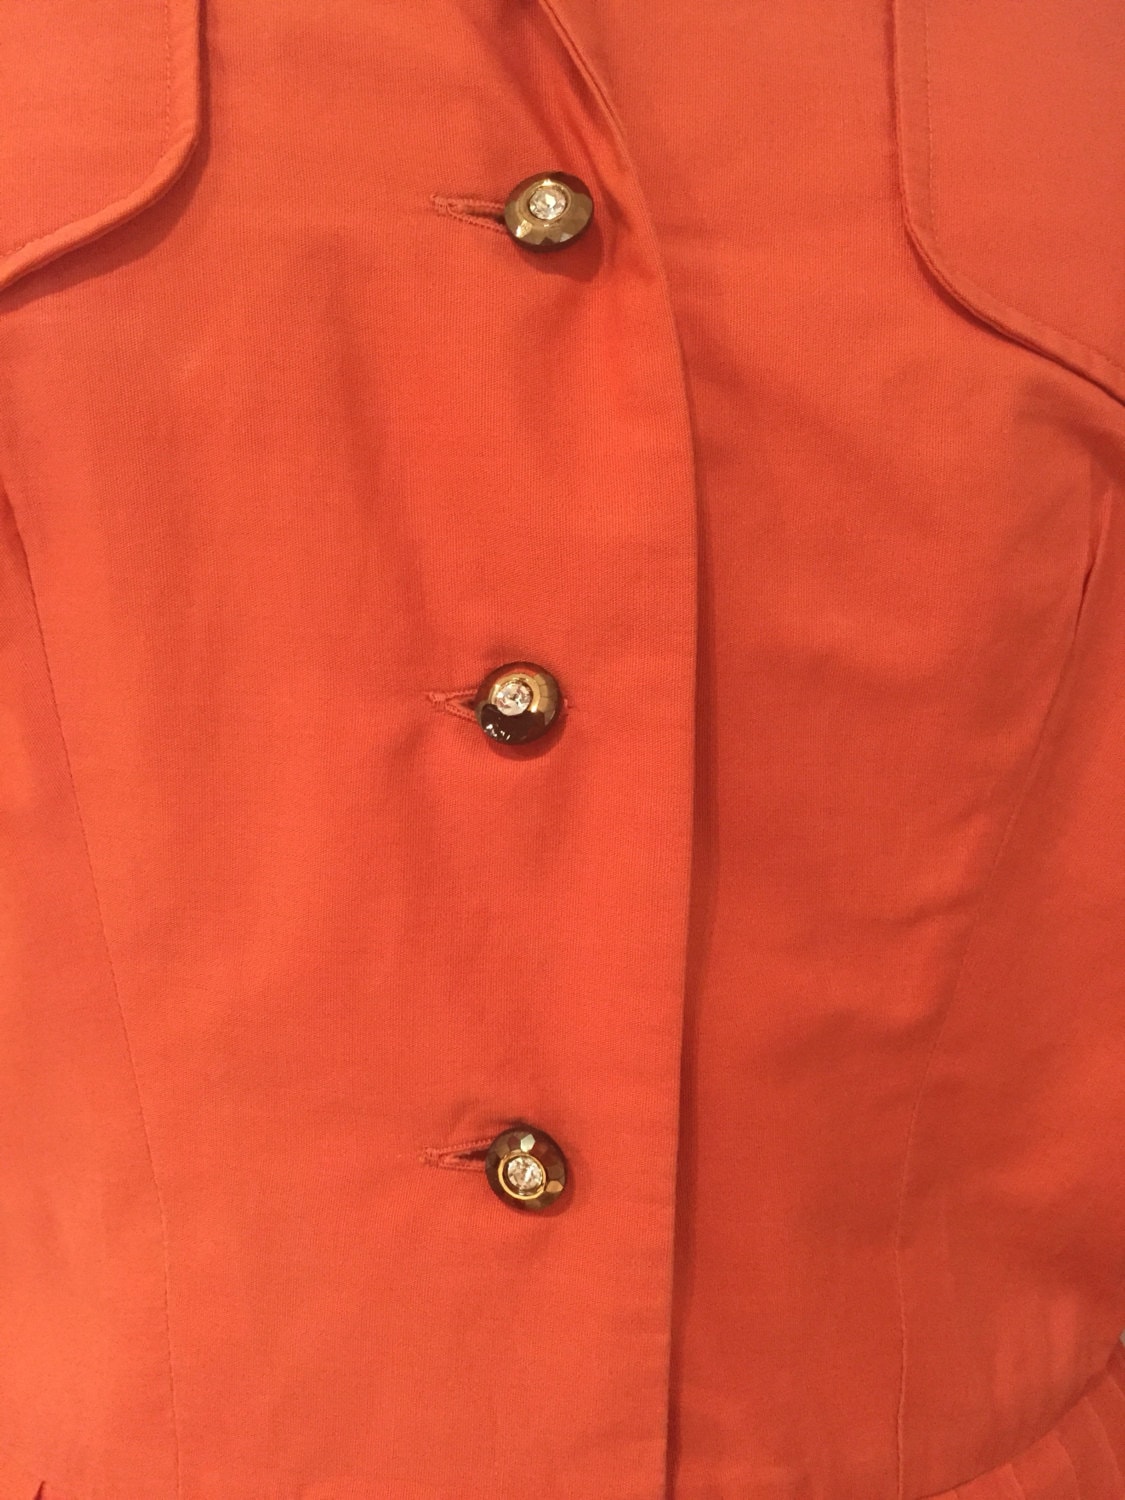 Vintage Peter Barron Shirt Dress 50s/60s - Etsy